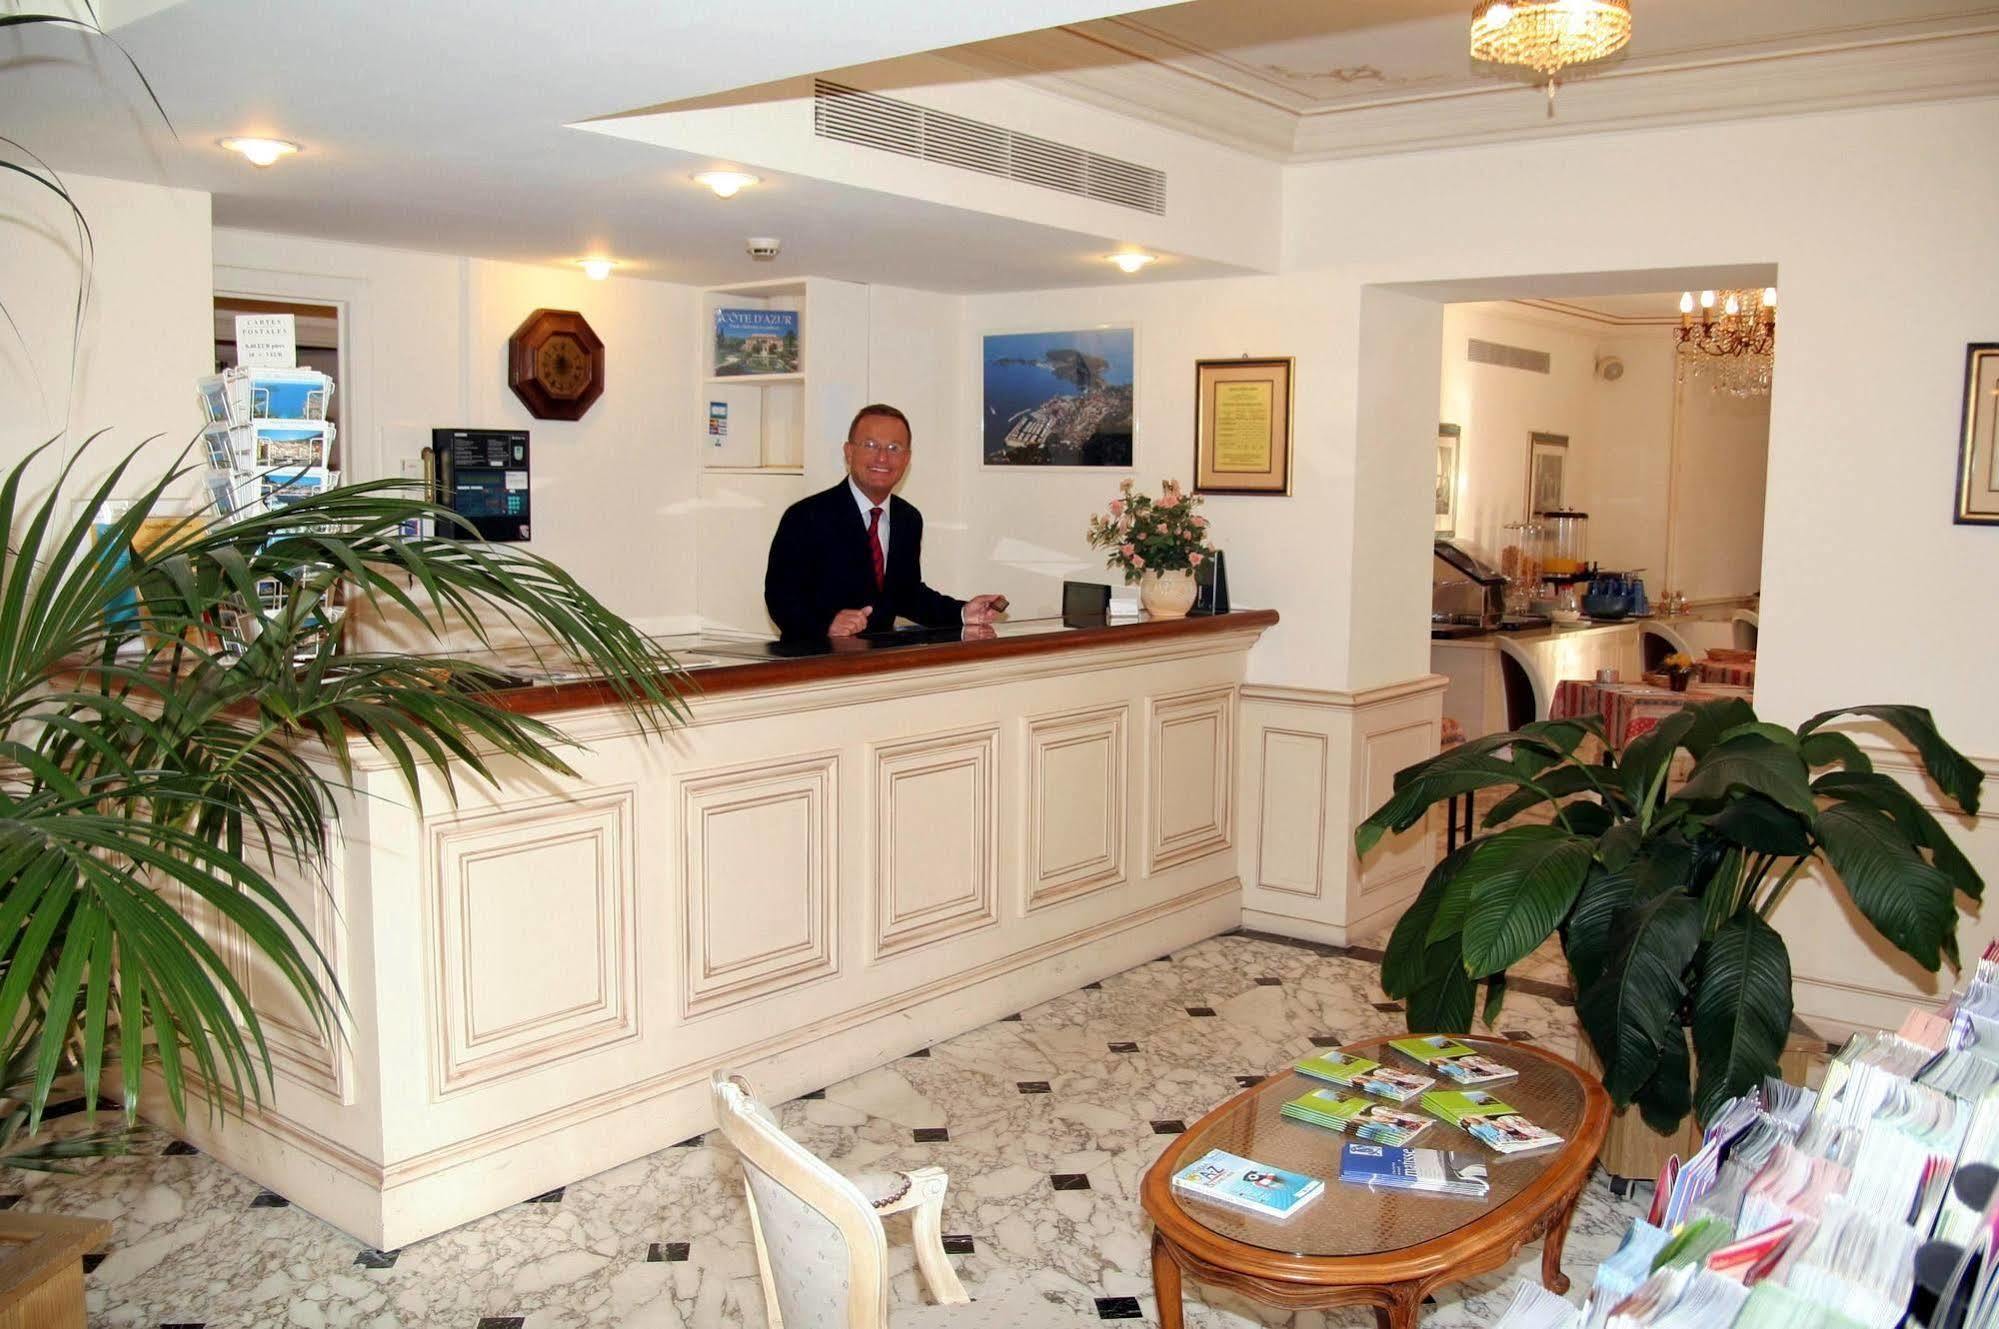 Hotel Carlton Beaulieu-sur-Mer Exterior photo